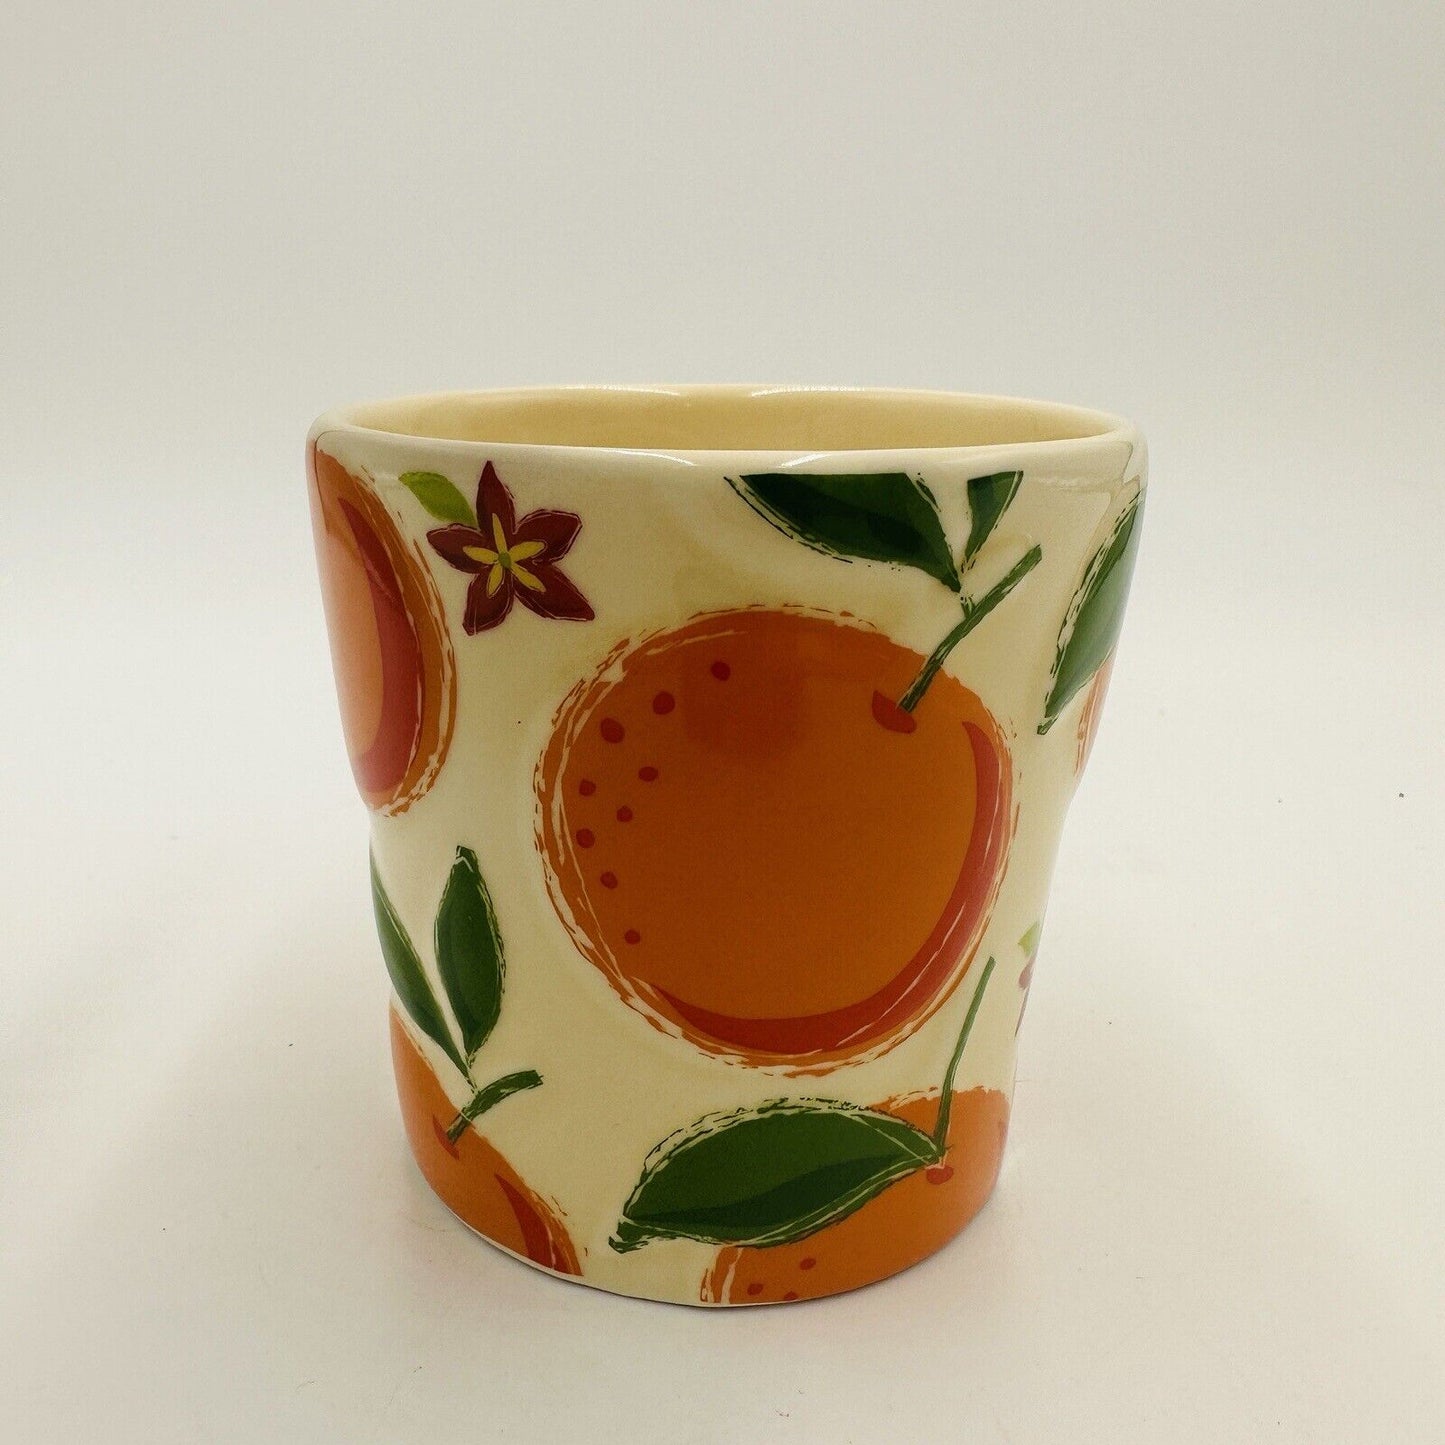 Starbucks Mug 2006 Oranges Embossed Ceramic Summer Coffee Cup Orange Vintage